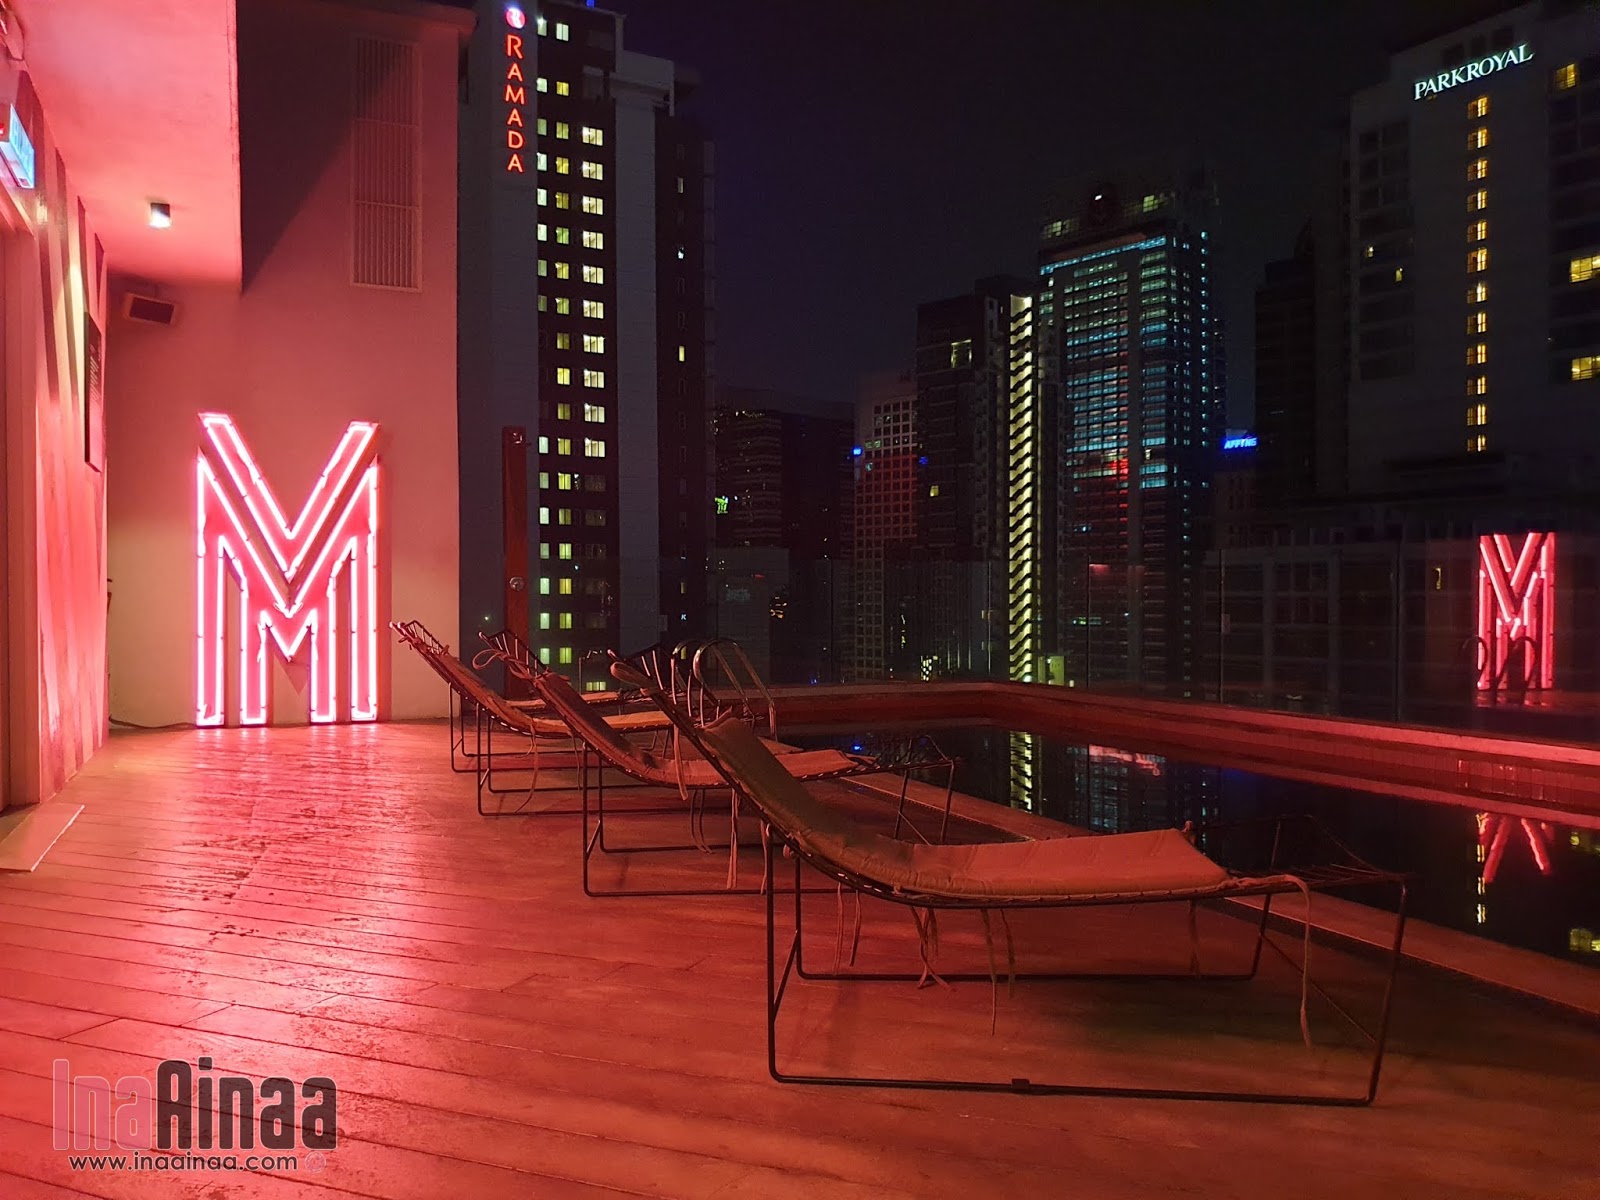 MOV Hotel Kuala Lumpur - Hak milik Ina Ainaa